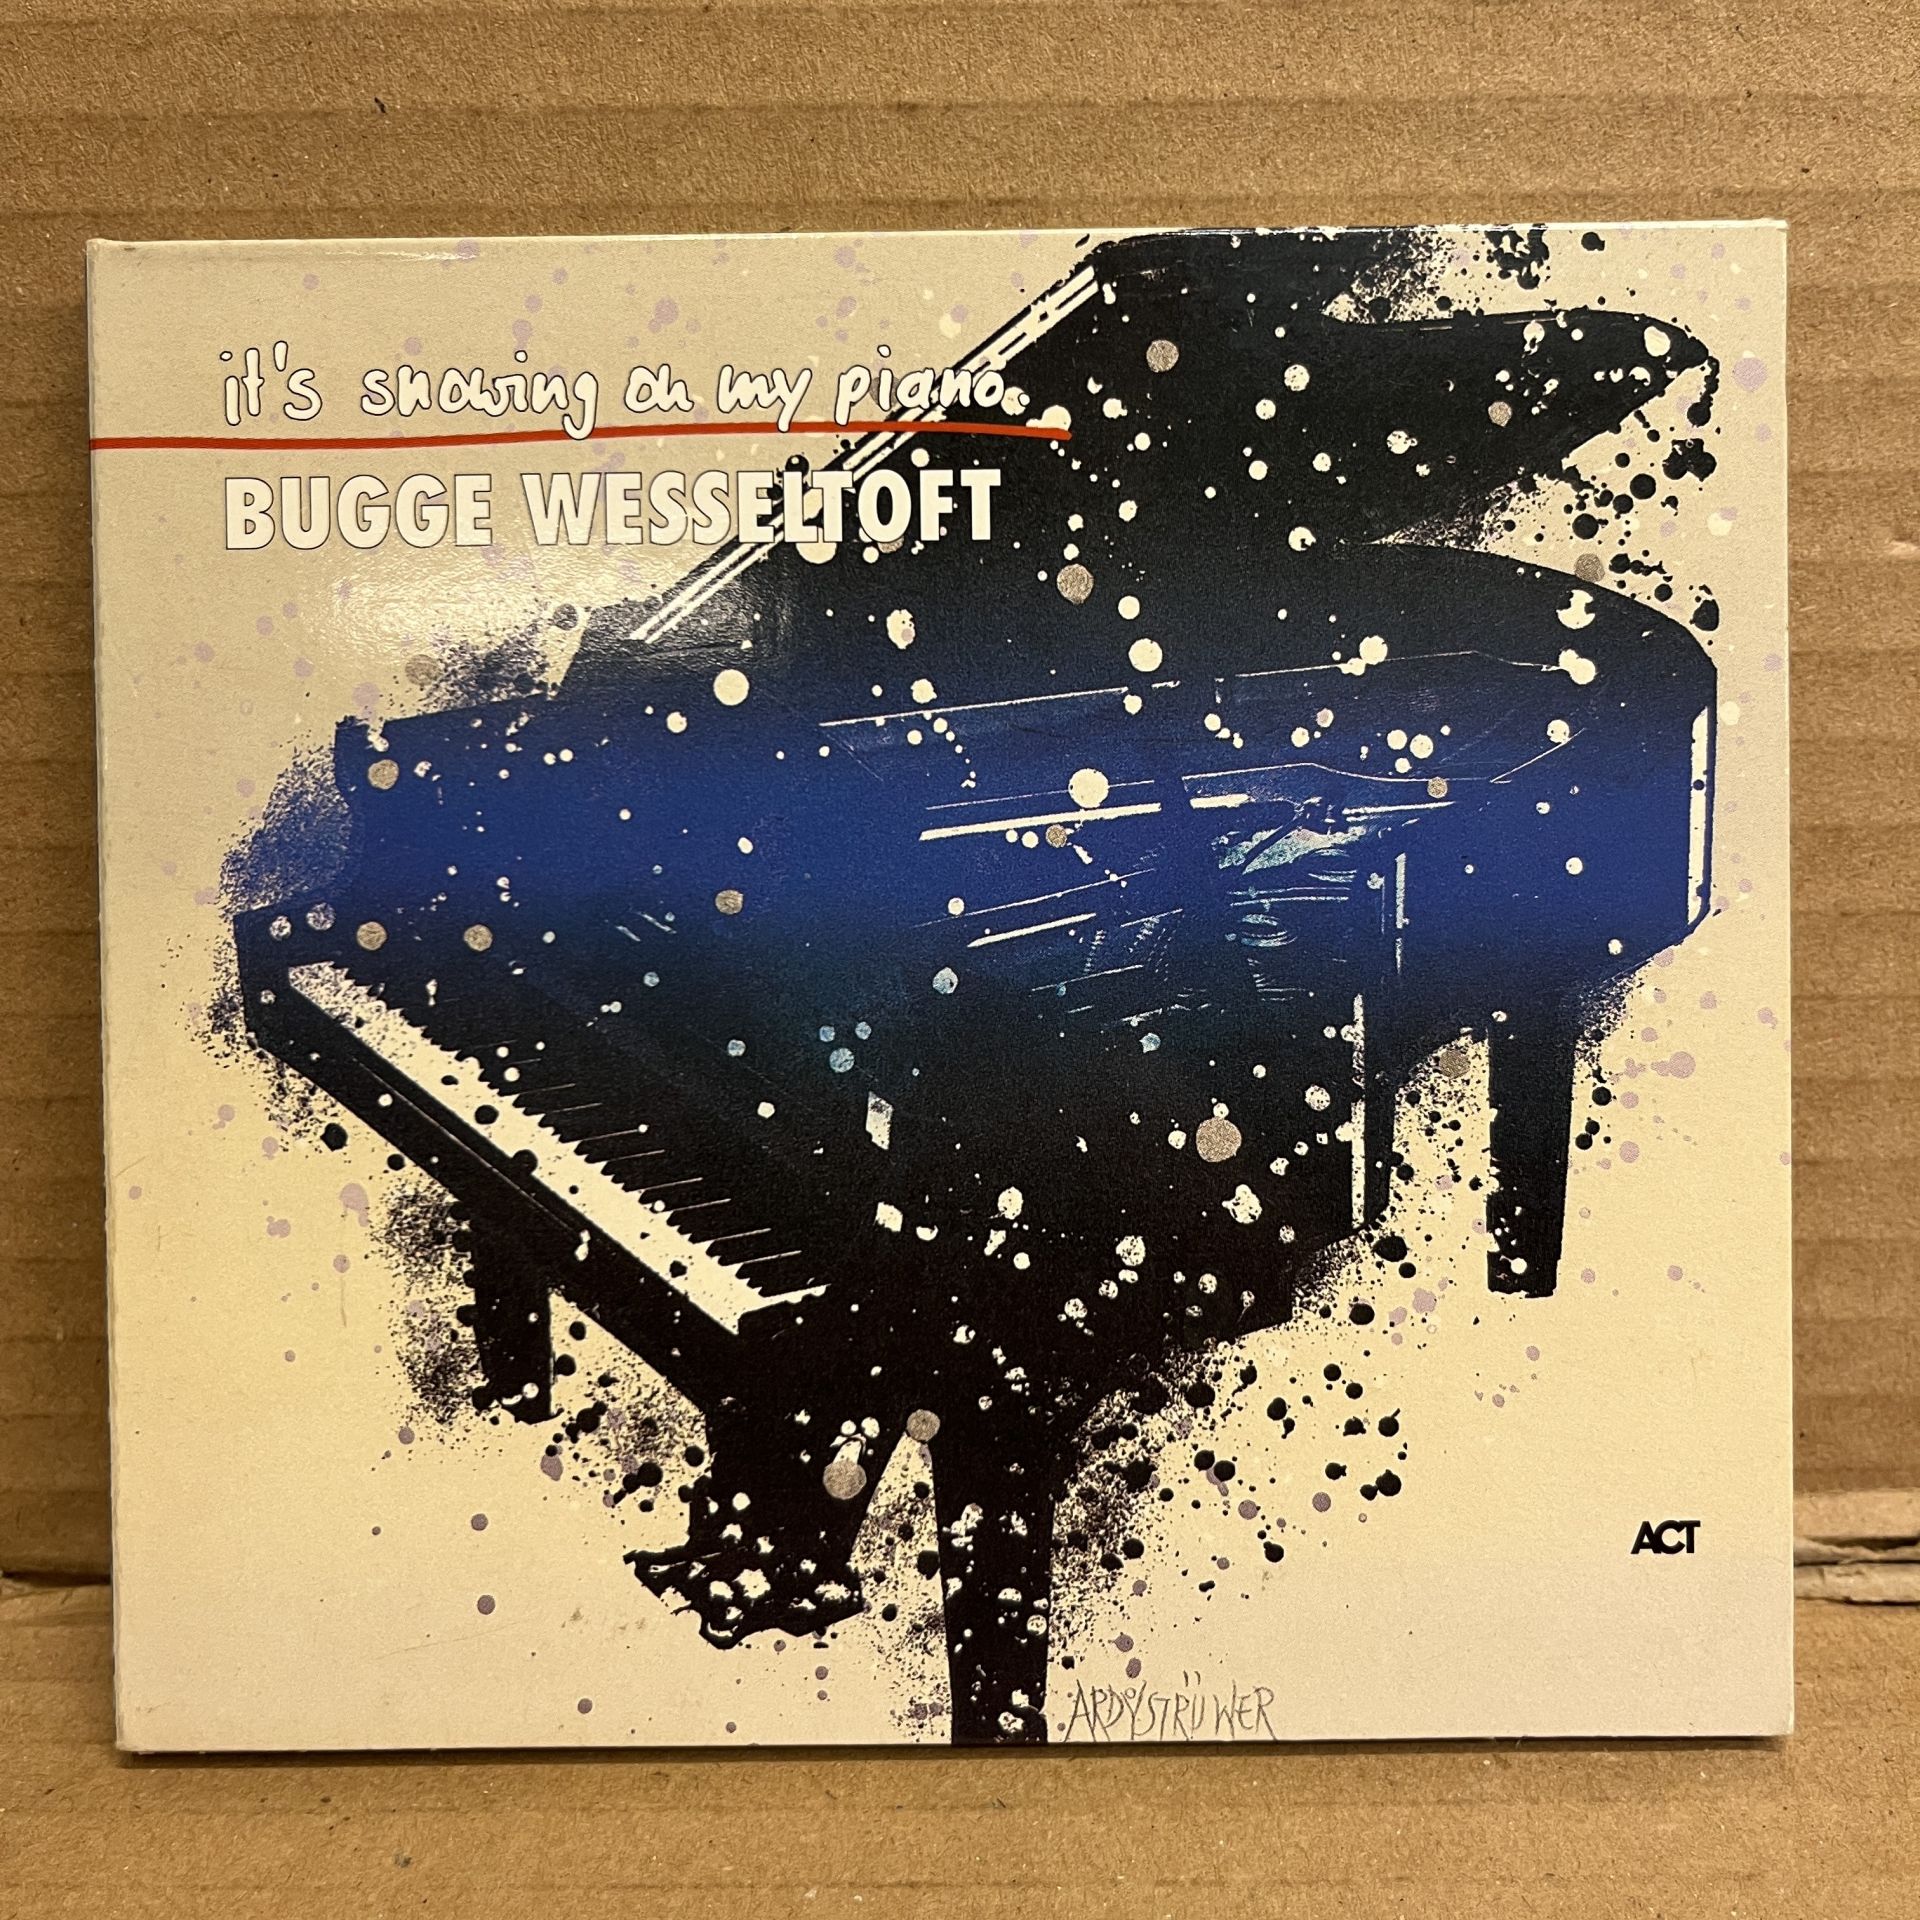 BUGGE WESSELTOFT – IT'S SNOWING ON MY PIANO (1997) - CD ACT DIGIPAK 2.EL